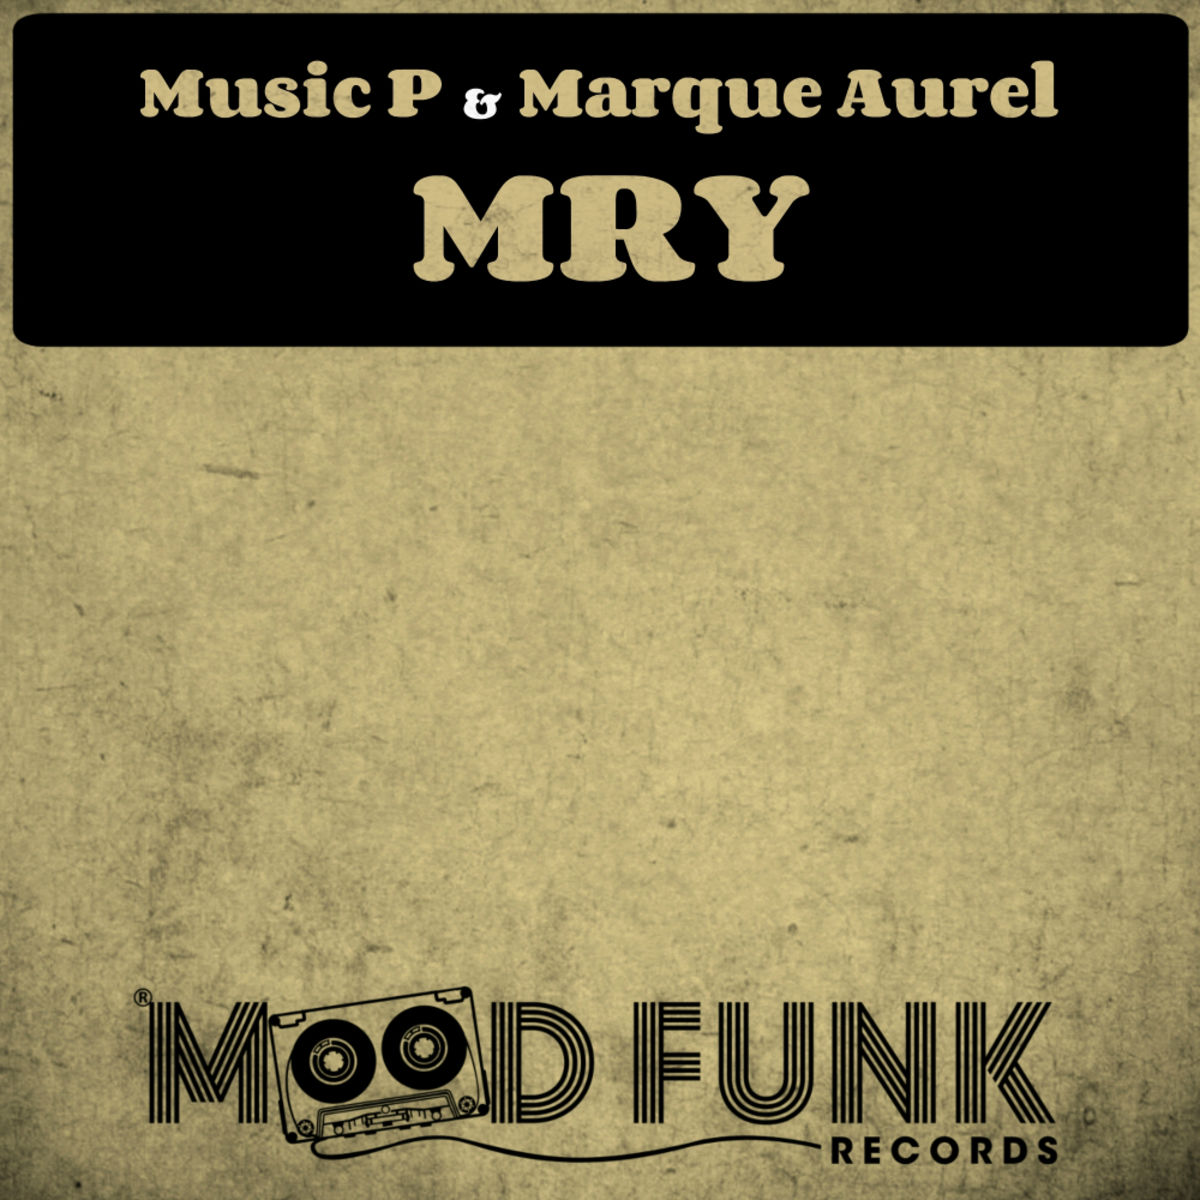 Music P & Marque Aurel - Mry / Mood Funk Records